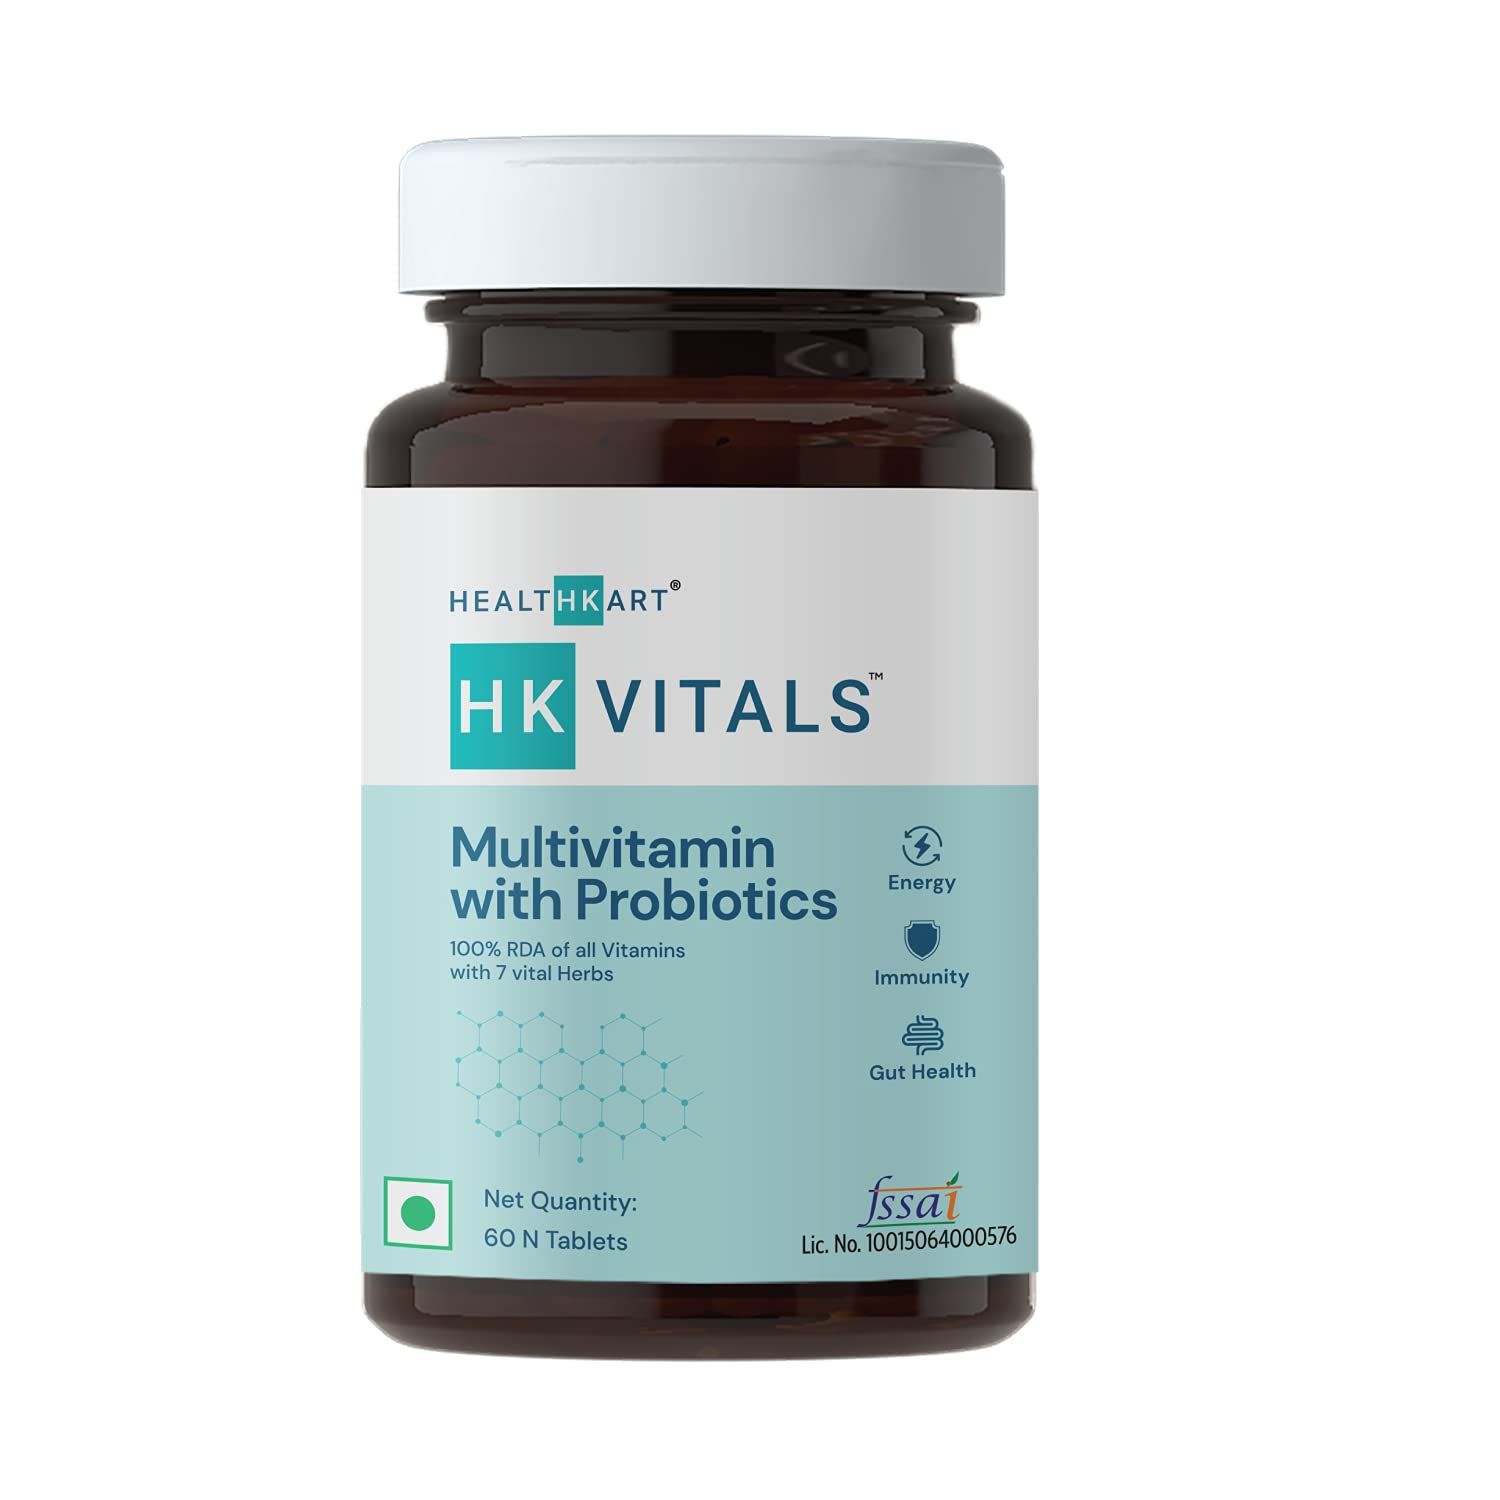 HK Vitals Multivitamin With Probiotics Image